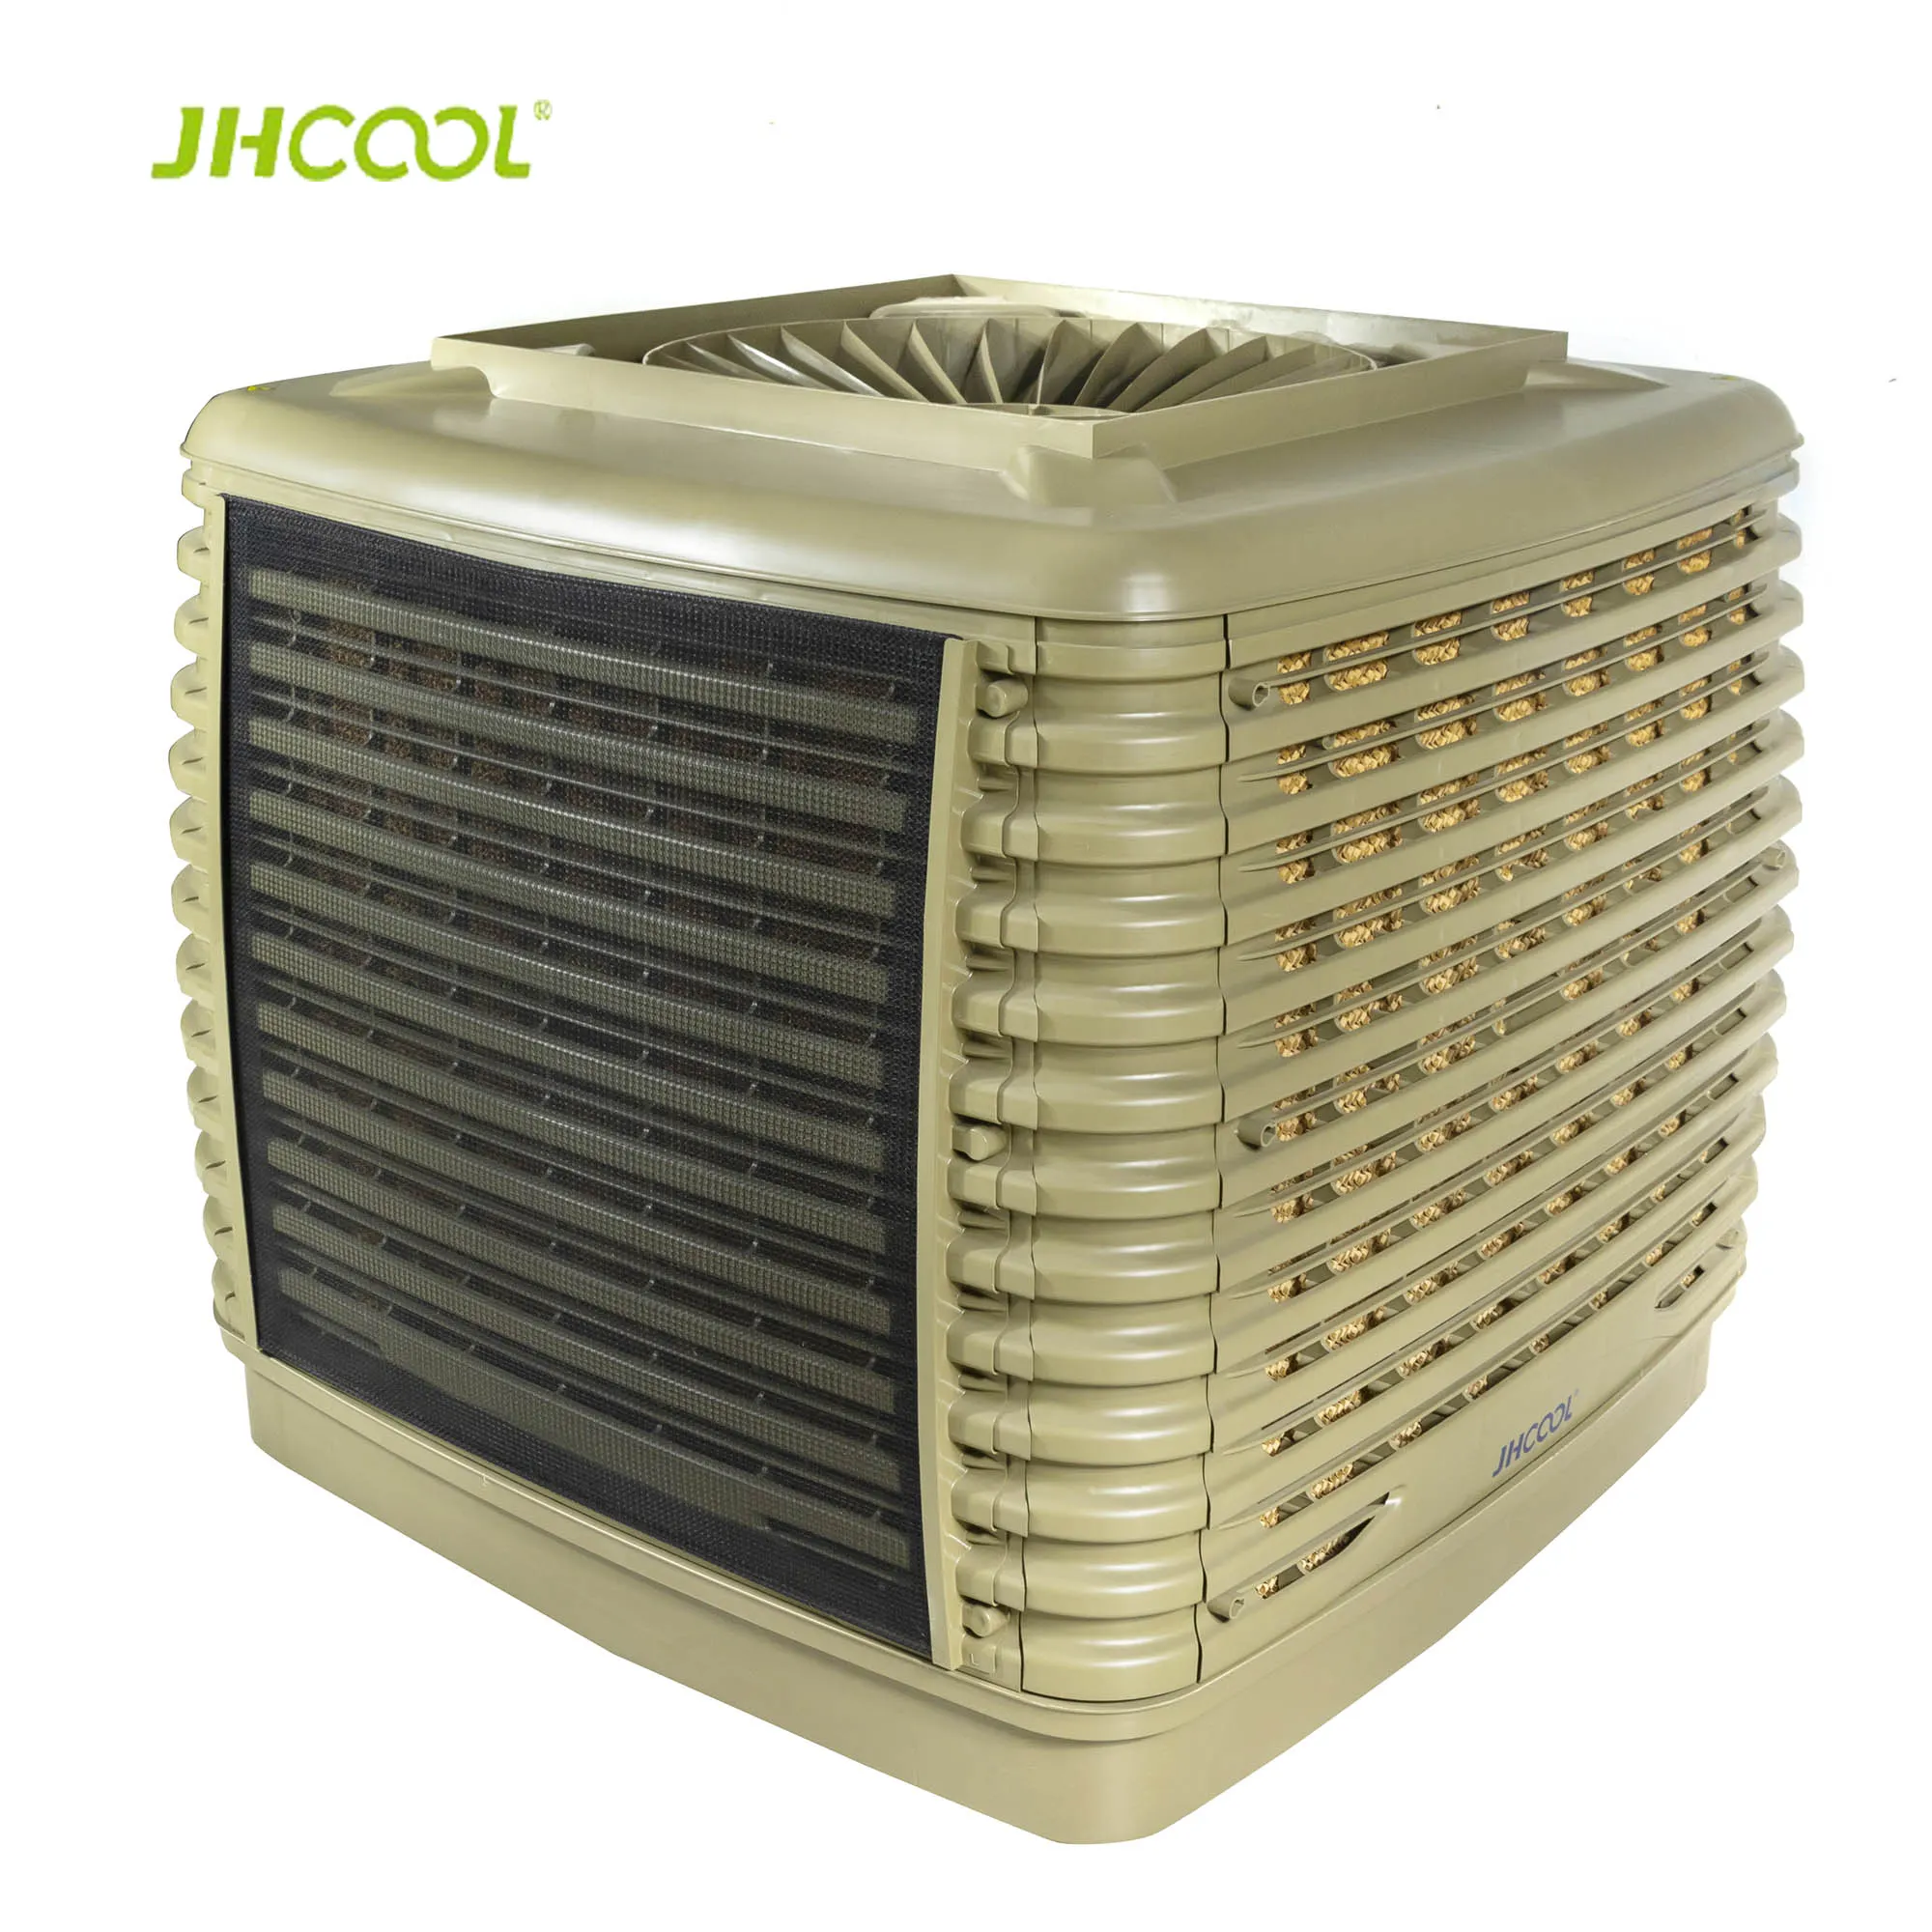 JHCOOL 30000 cmh airflow 상부 배출 산업용 지붕 장착 공기 냉각기 3KW 전력 증발 에어 컨디셔너와 CE ROHS